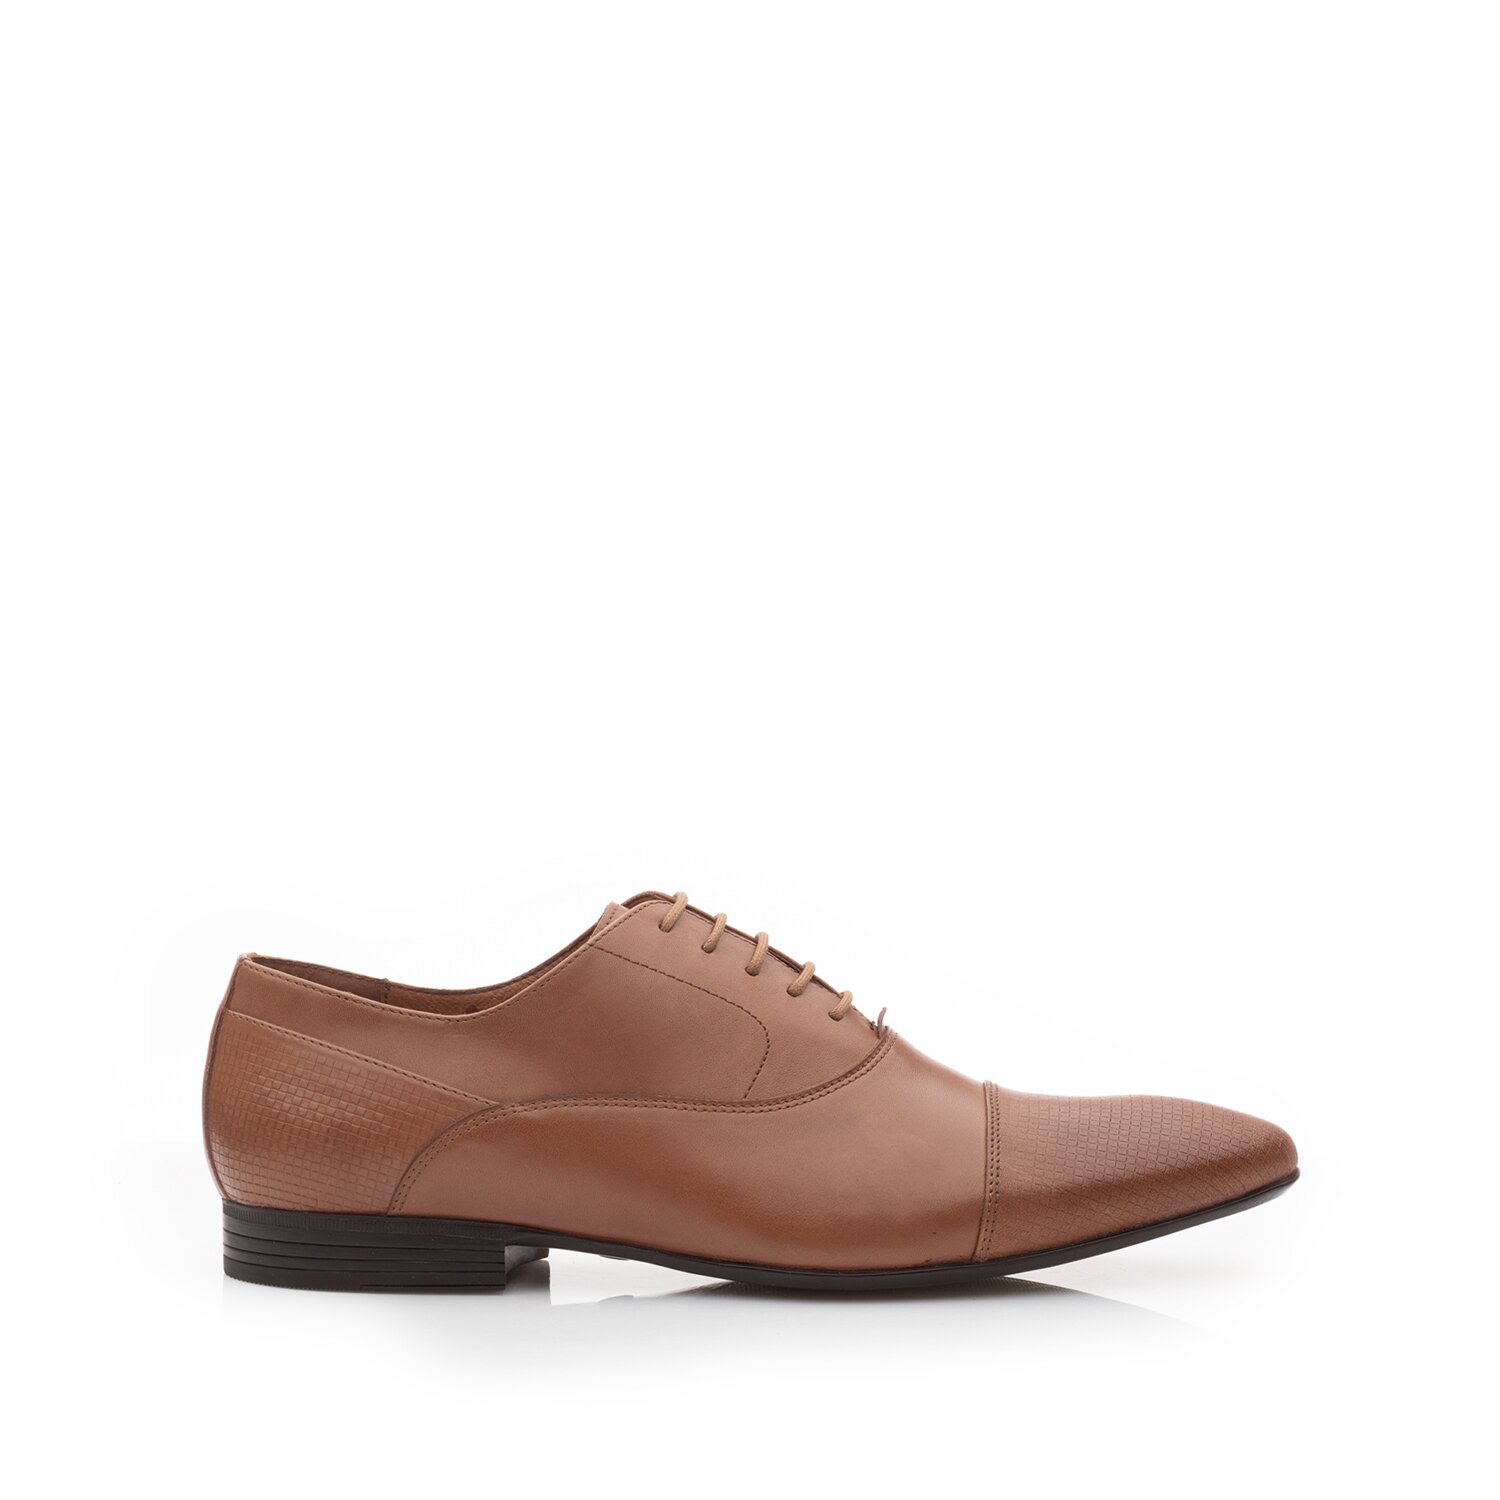 Pantofi eleganti barbati din piele naturala, Leofex - 834 Cognac 1 deshis box